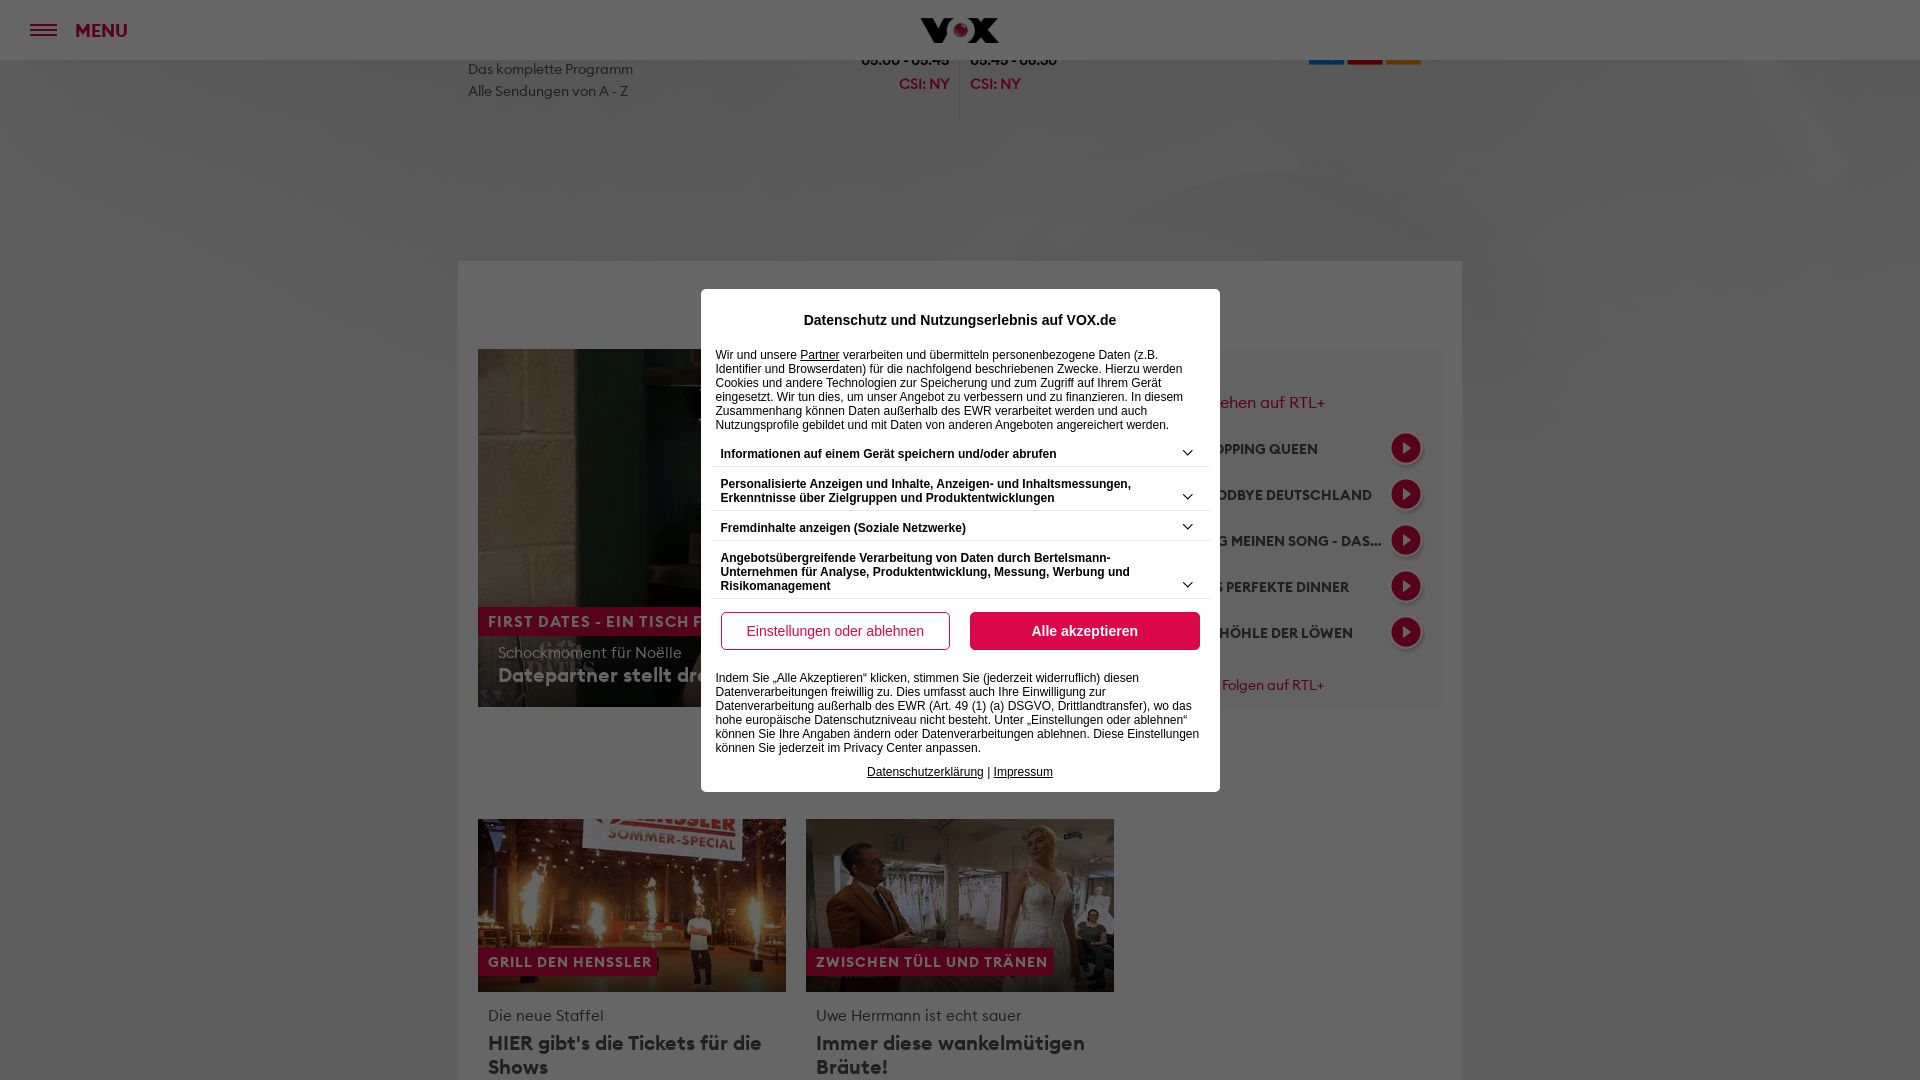 вебсайт vox.de Є   ONLINE